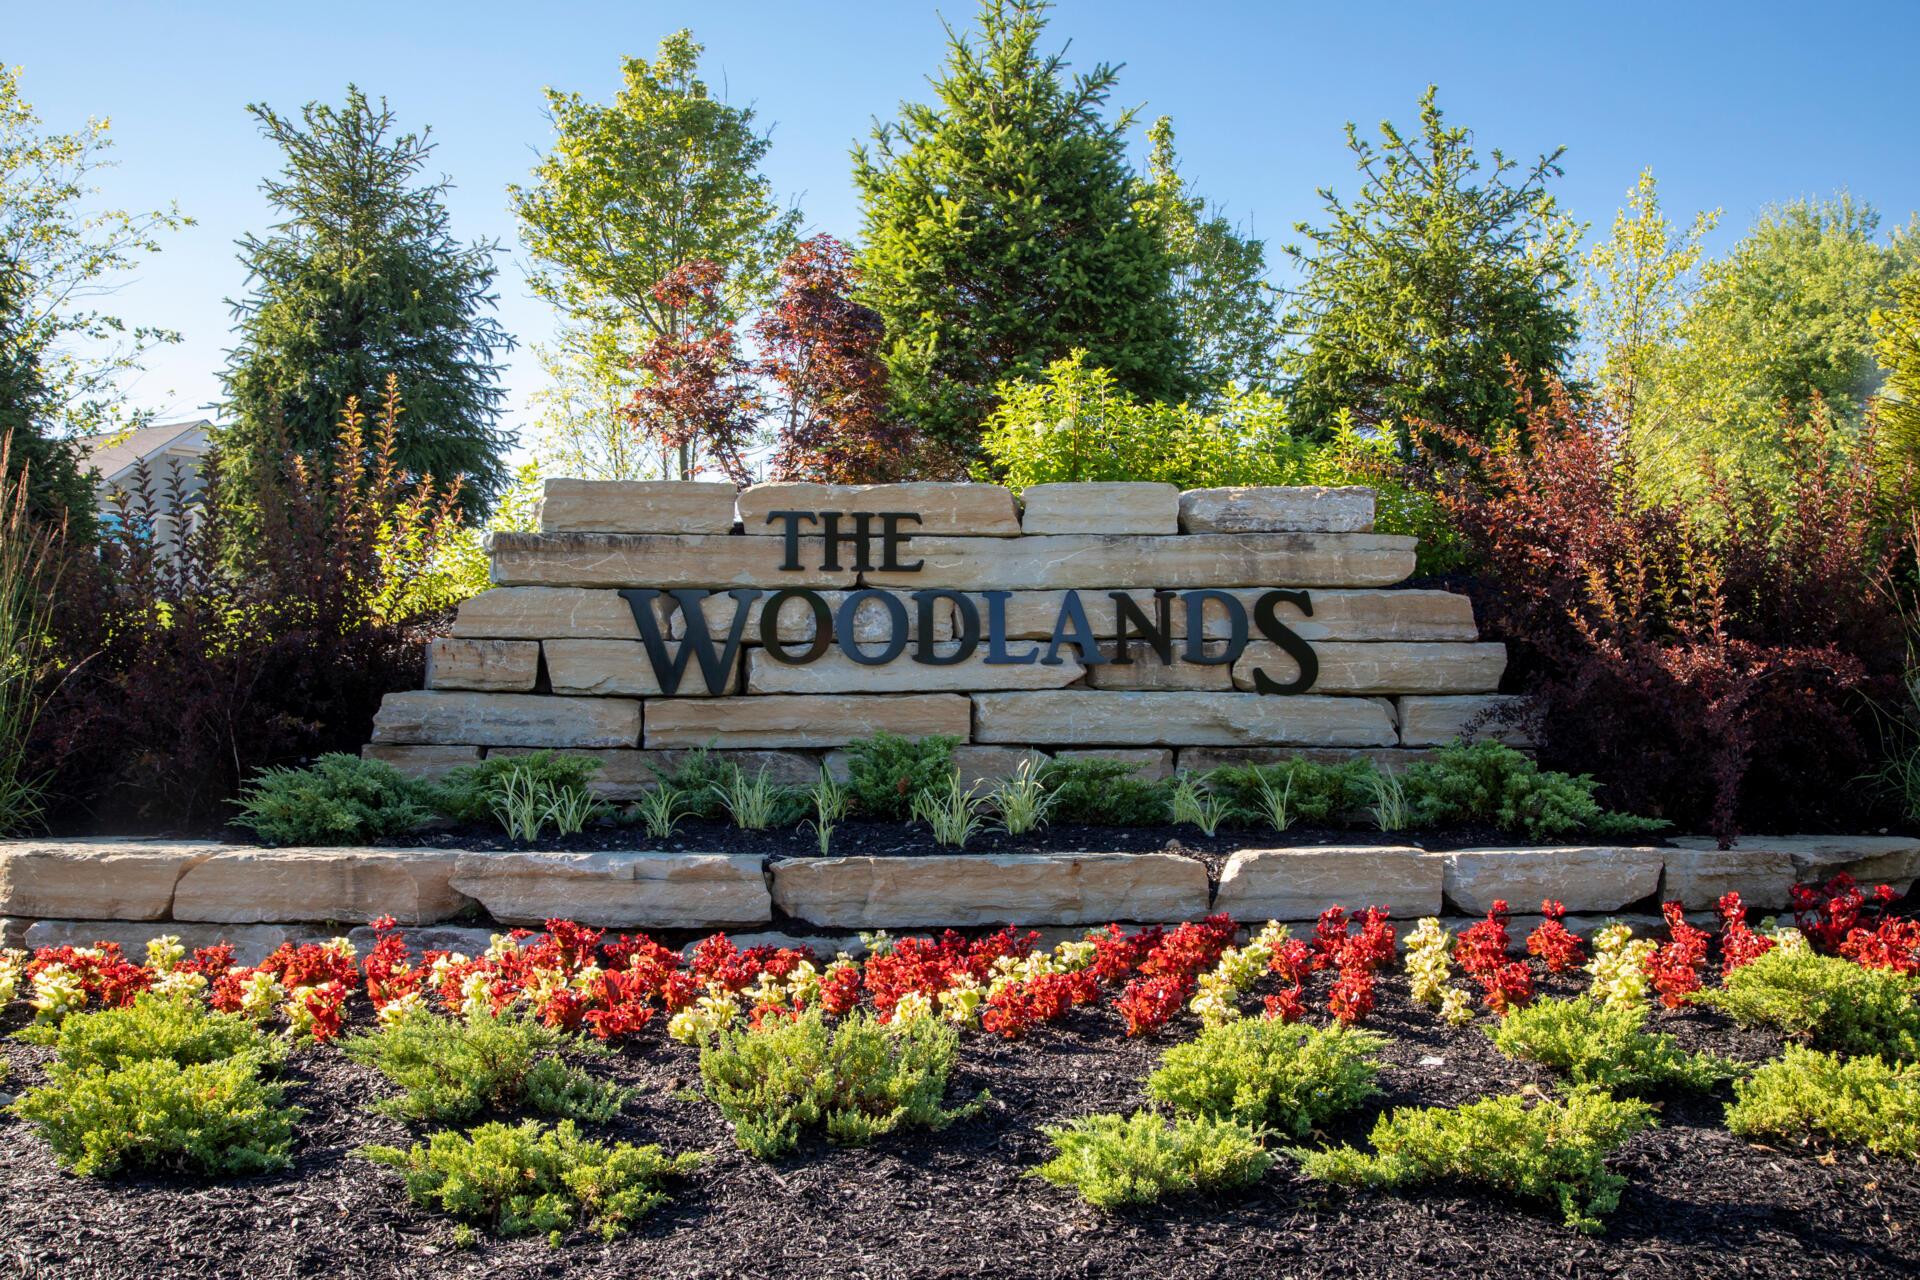 The Woodland Entrance